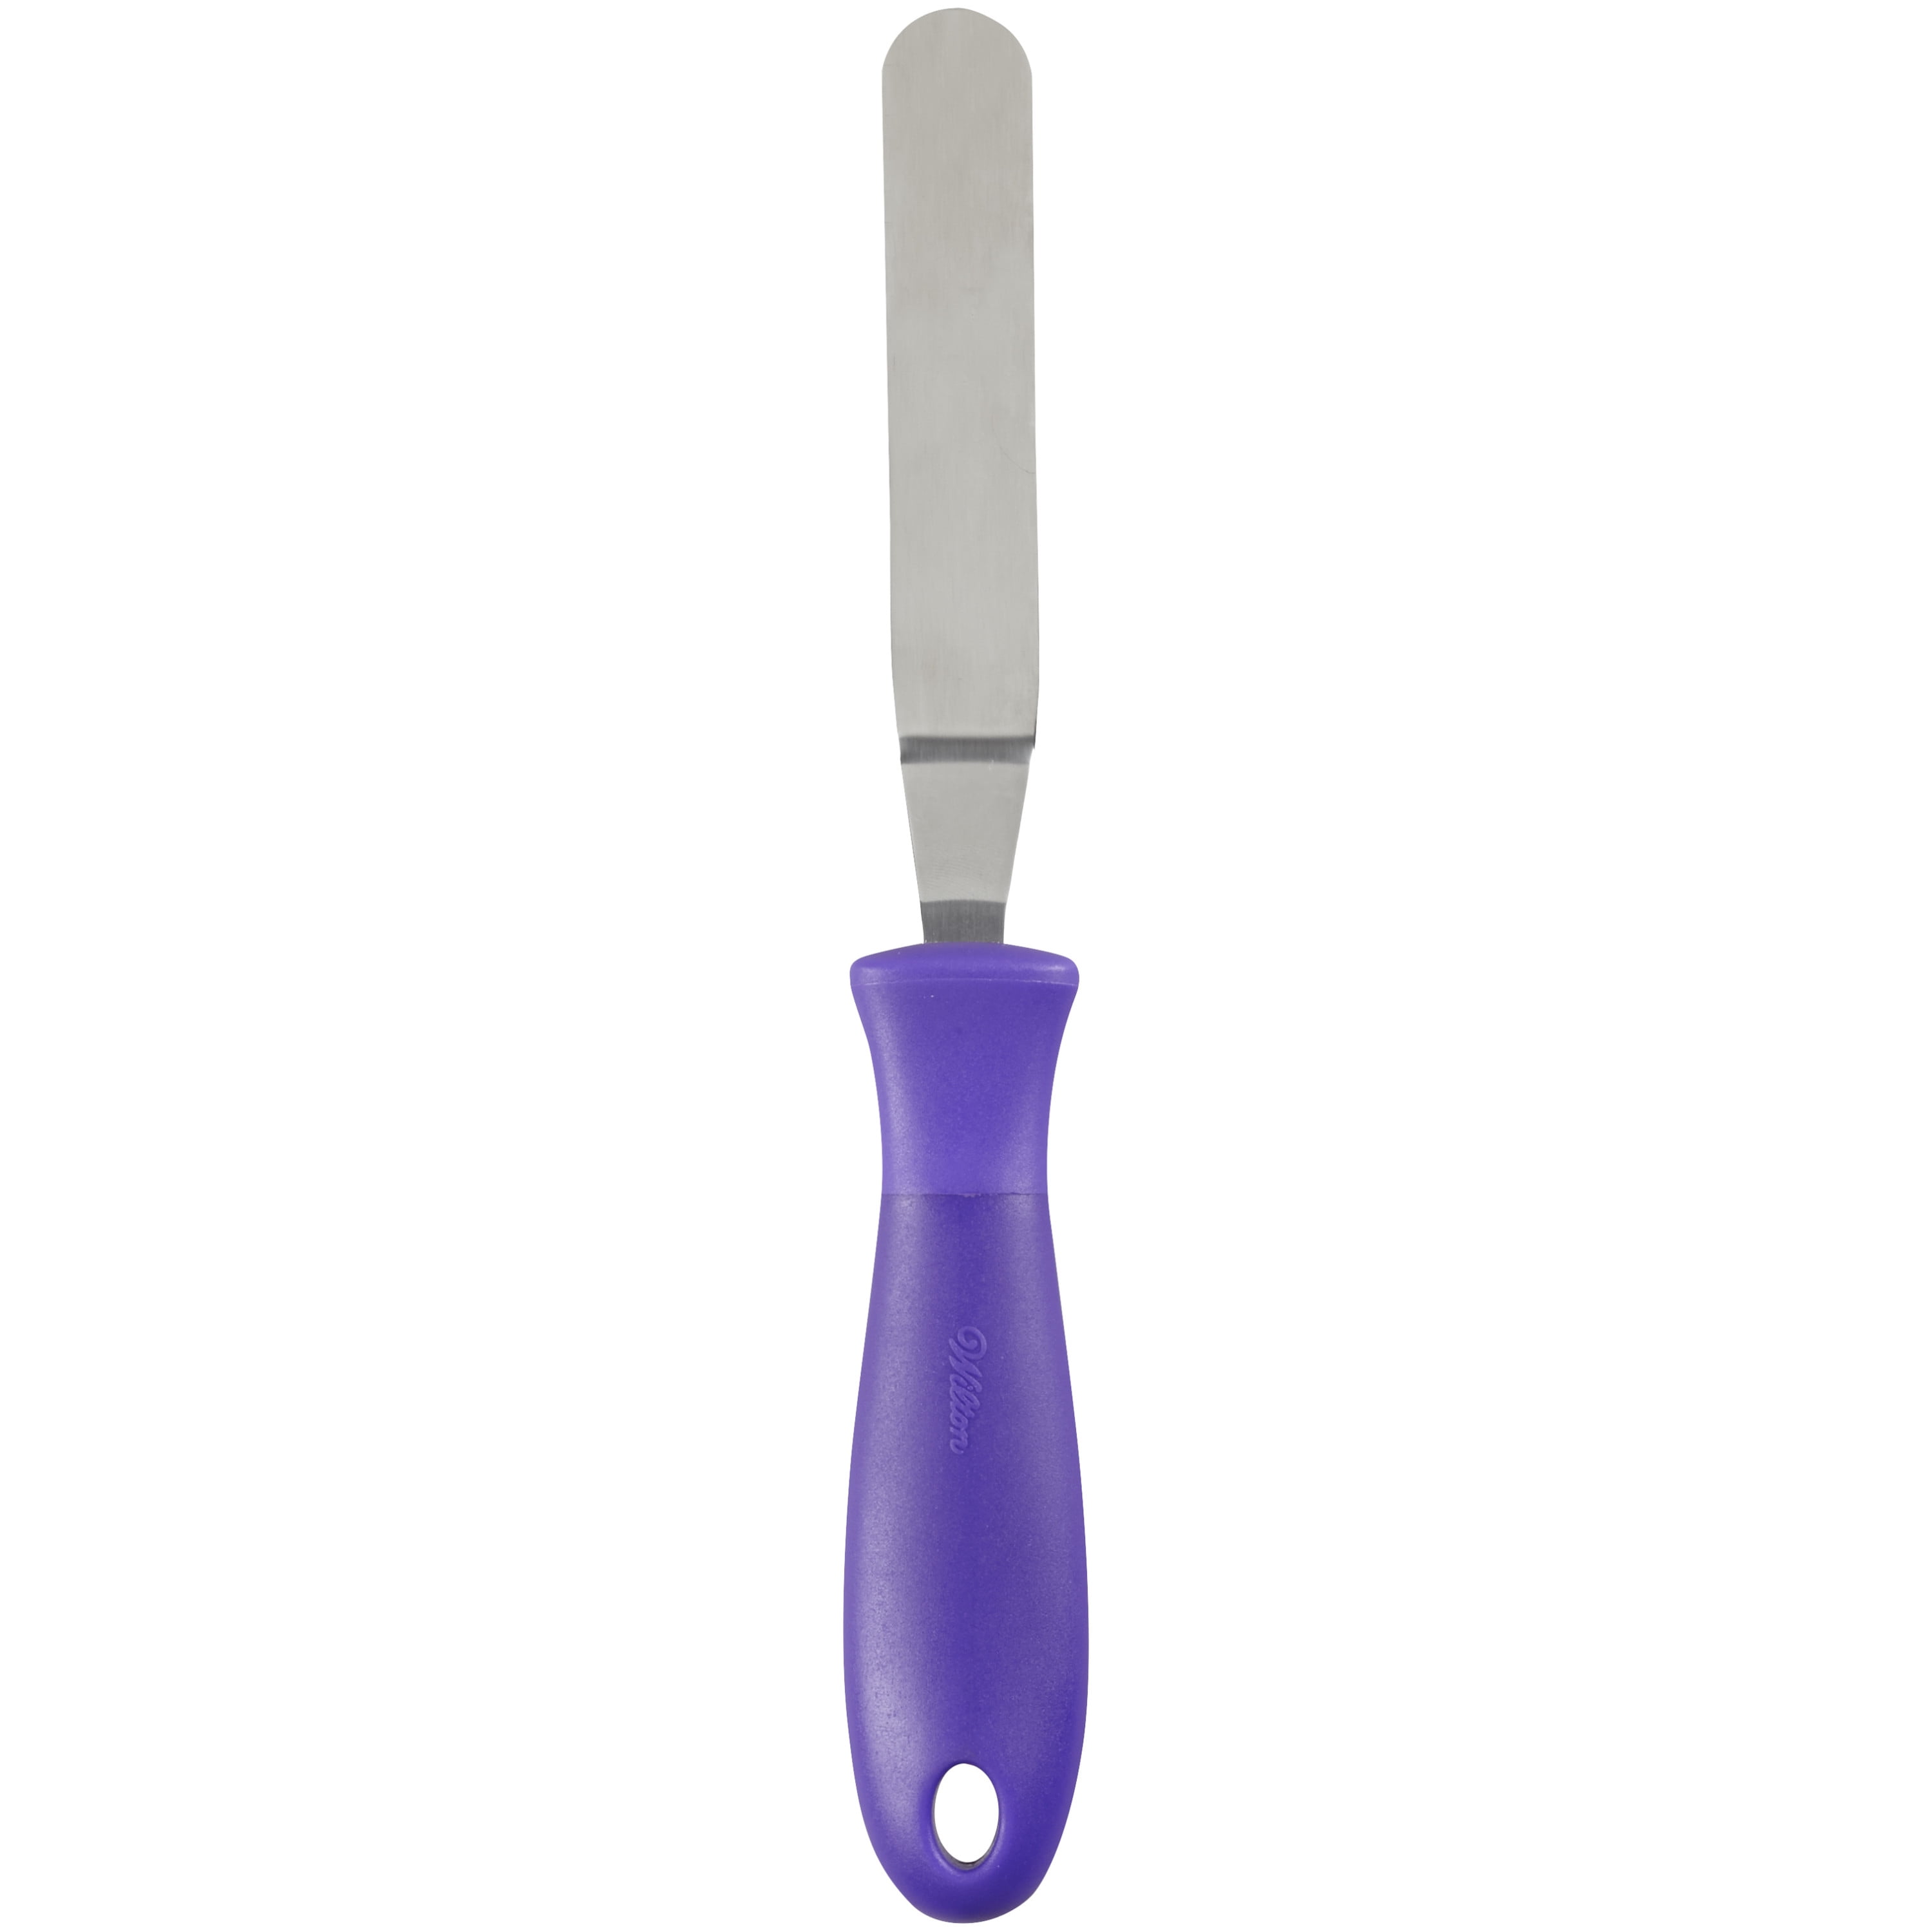 Wilton Angled Icing Spatula, 9-Inch, Purple